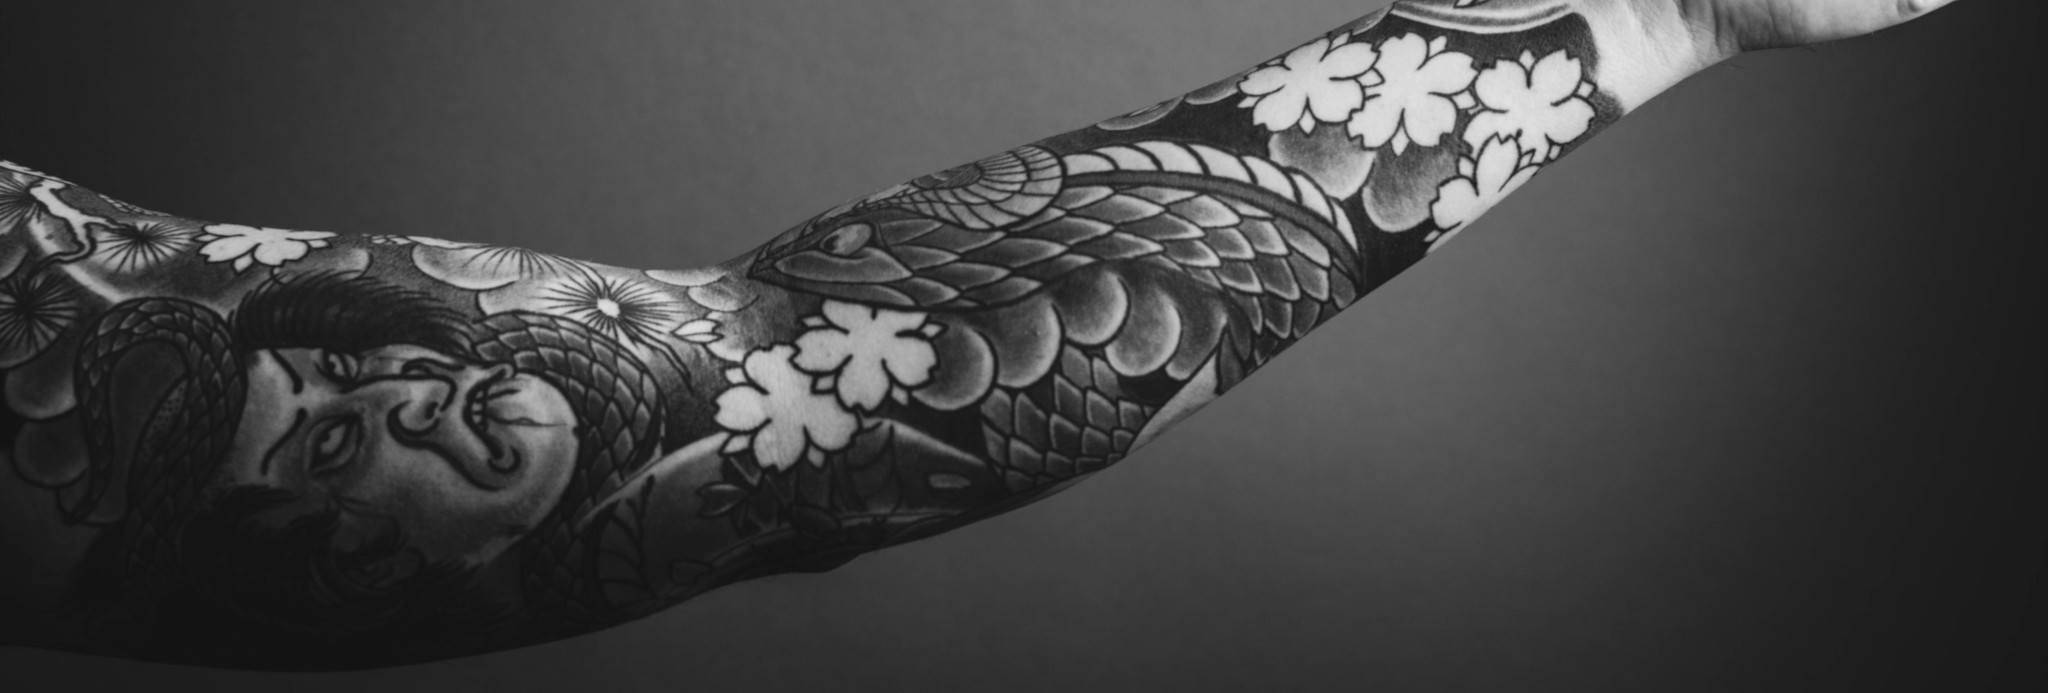 Camilla para tatuar 3 cuerpos beige — JatattooArt